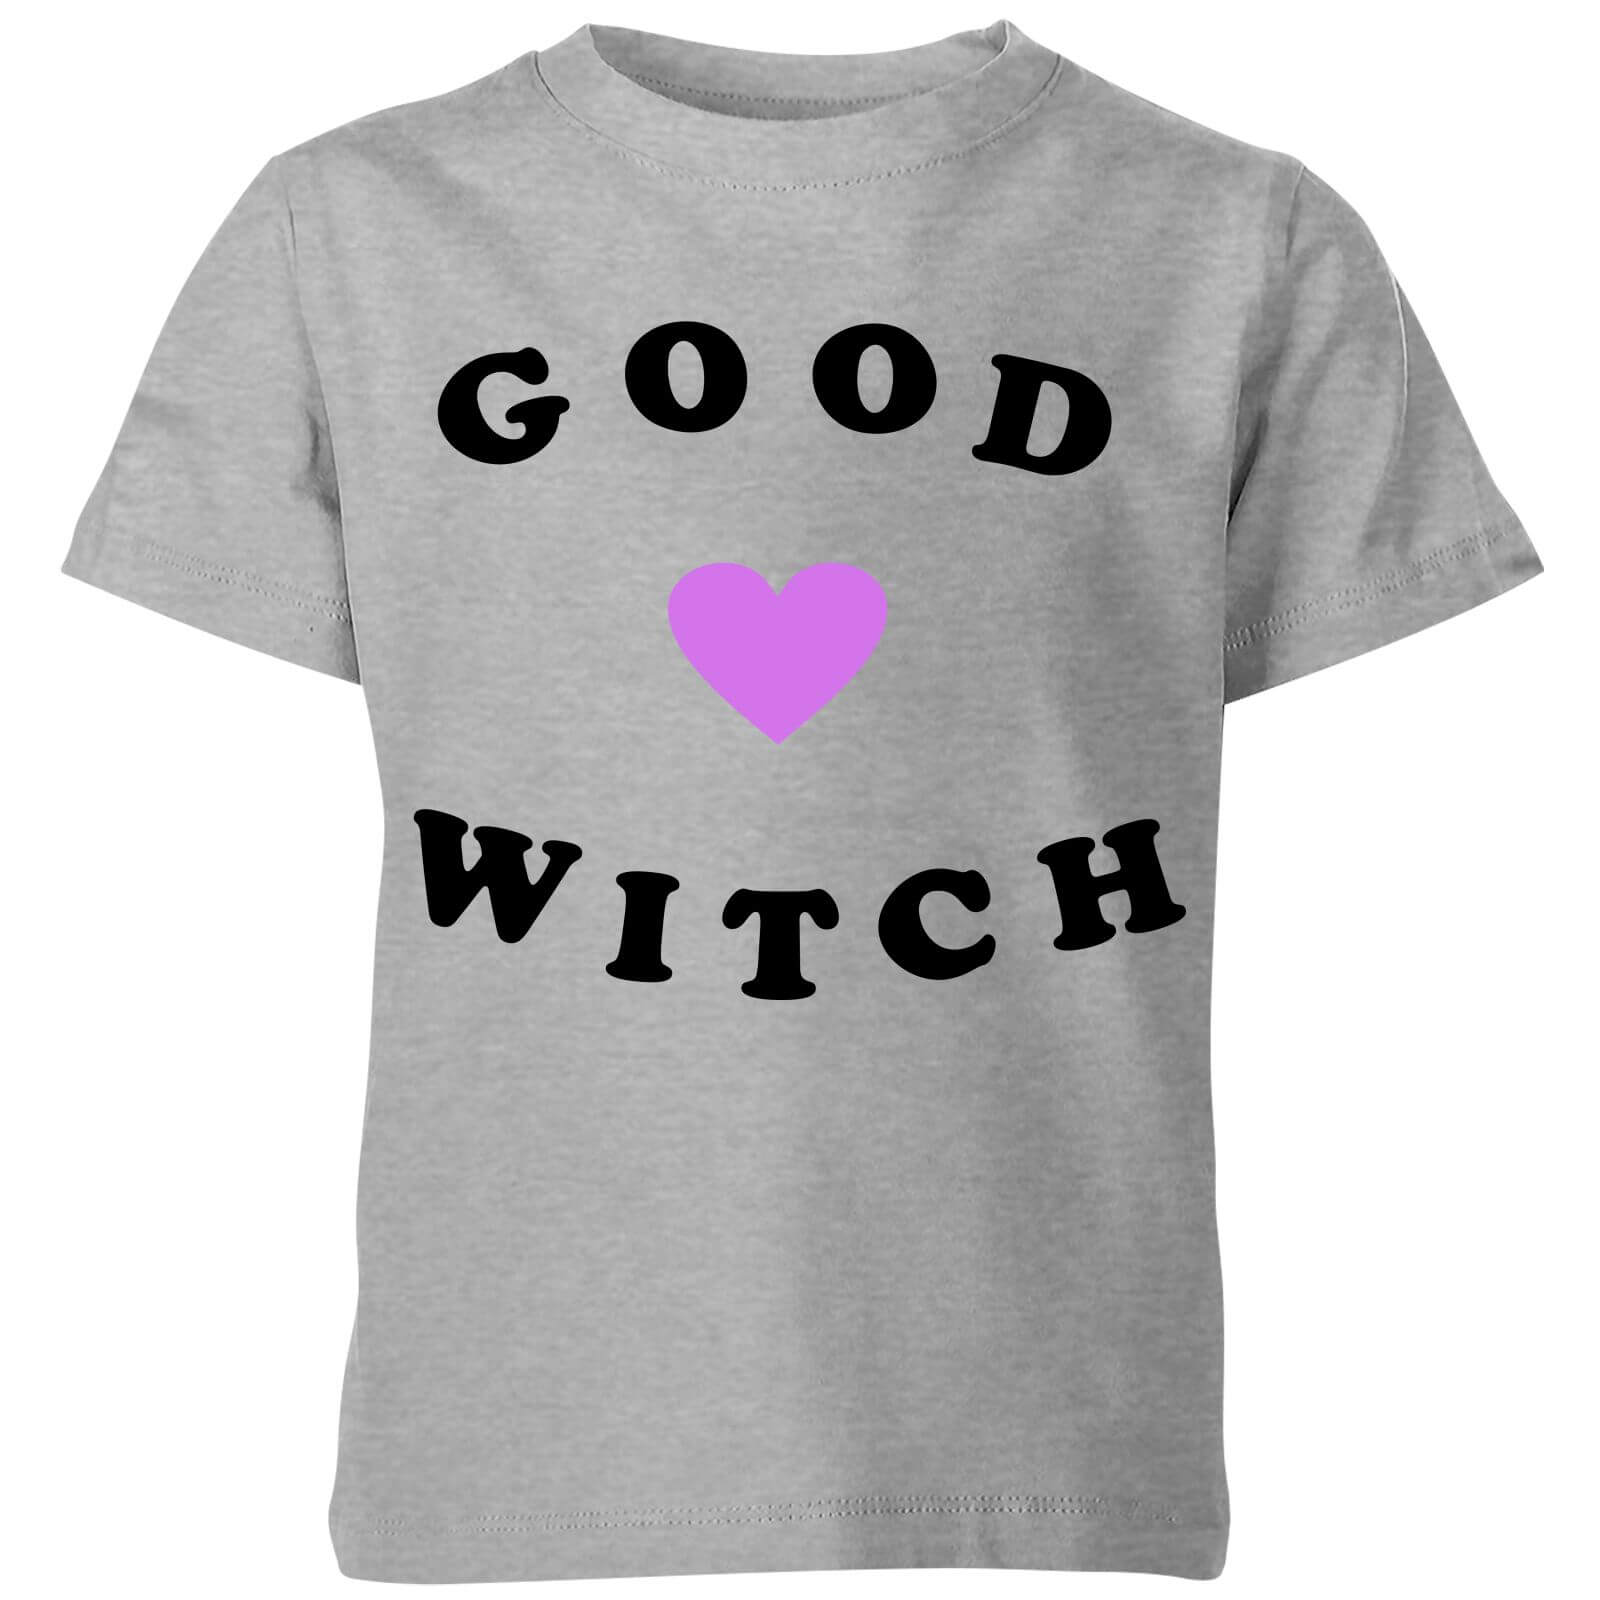 Good Witch Kids' T-Shirt - Grey - 3-4 Years - Grey